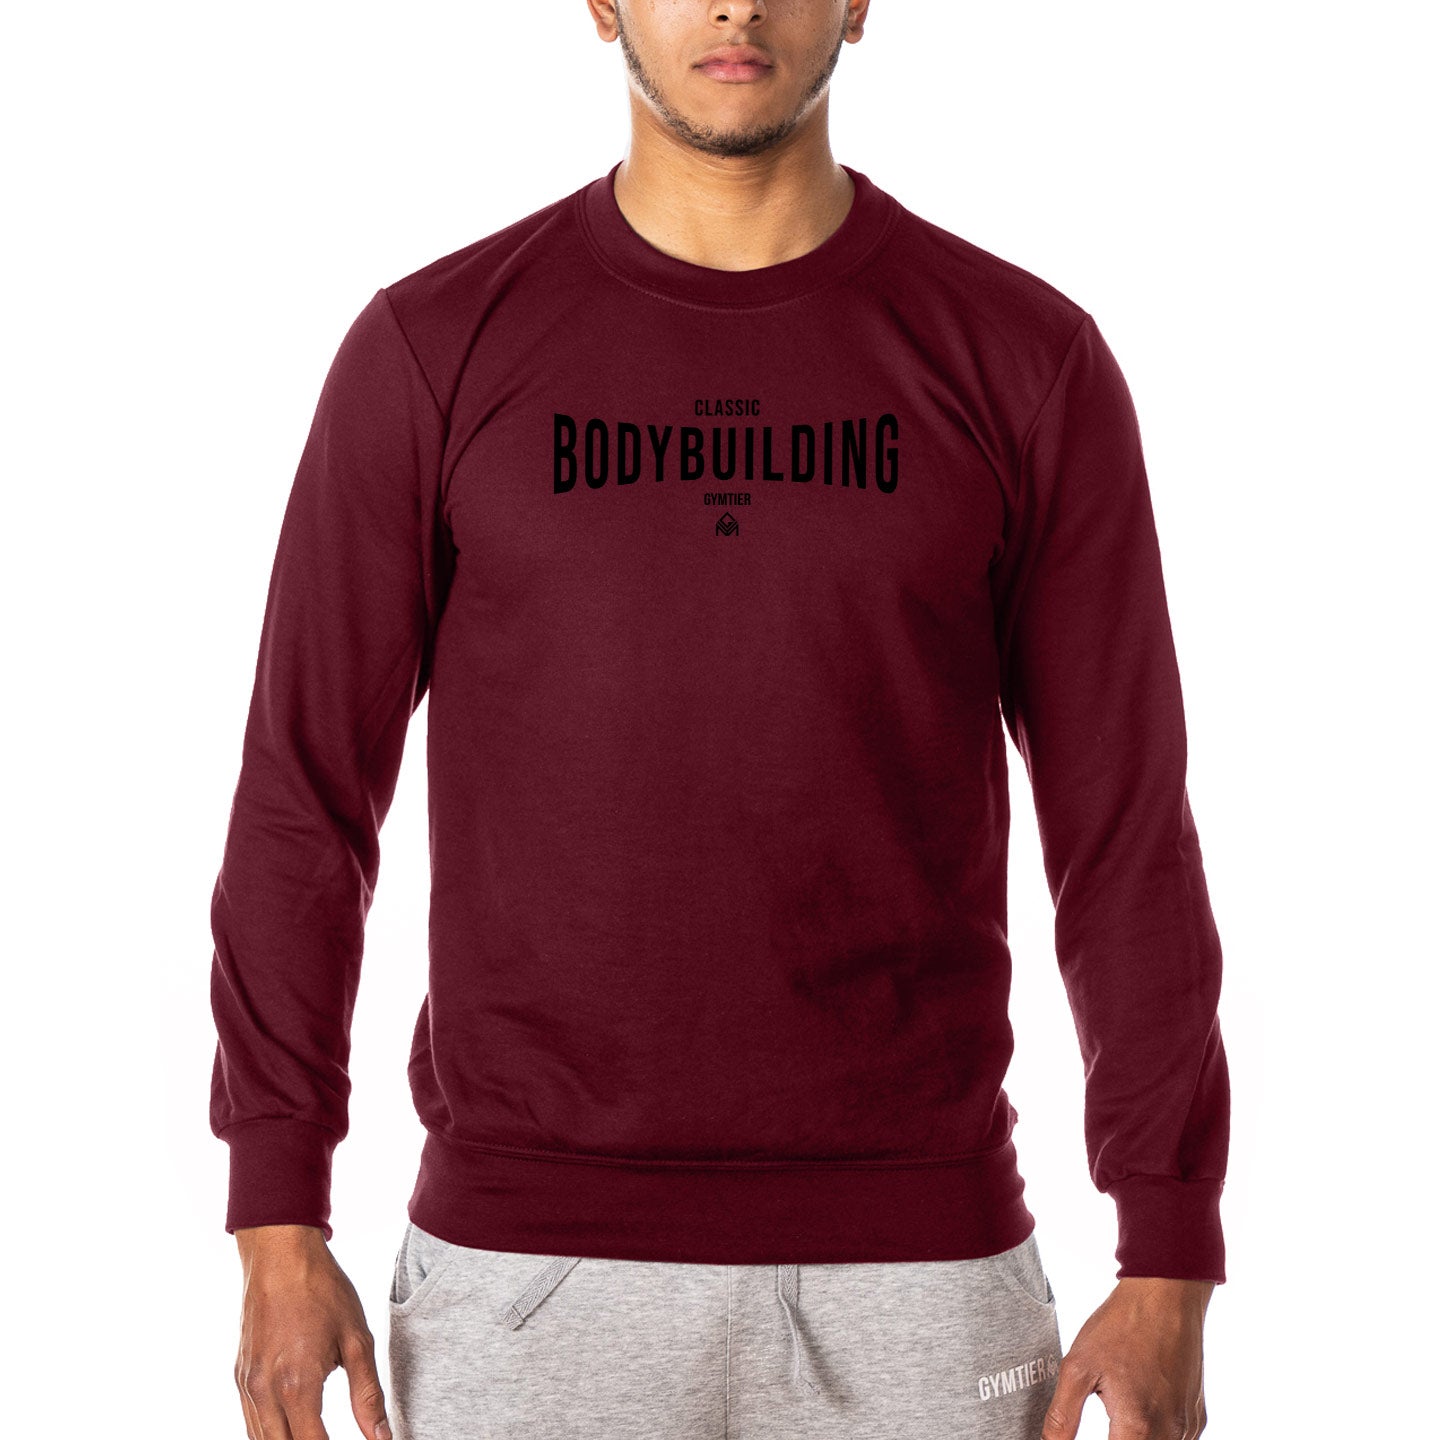 Classic Bodybuilding - Gym Sweatshirt